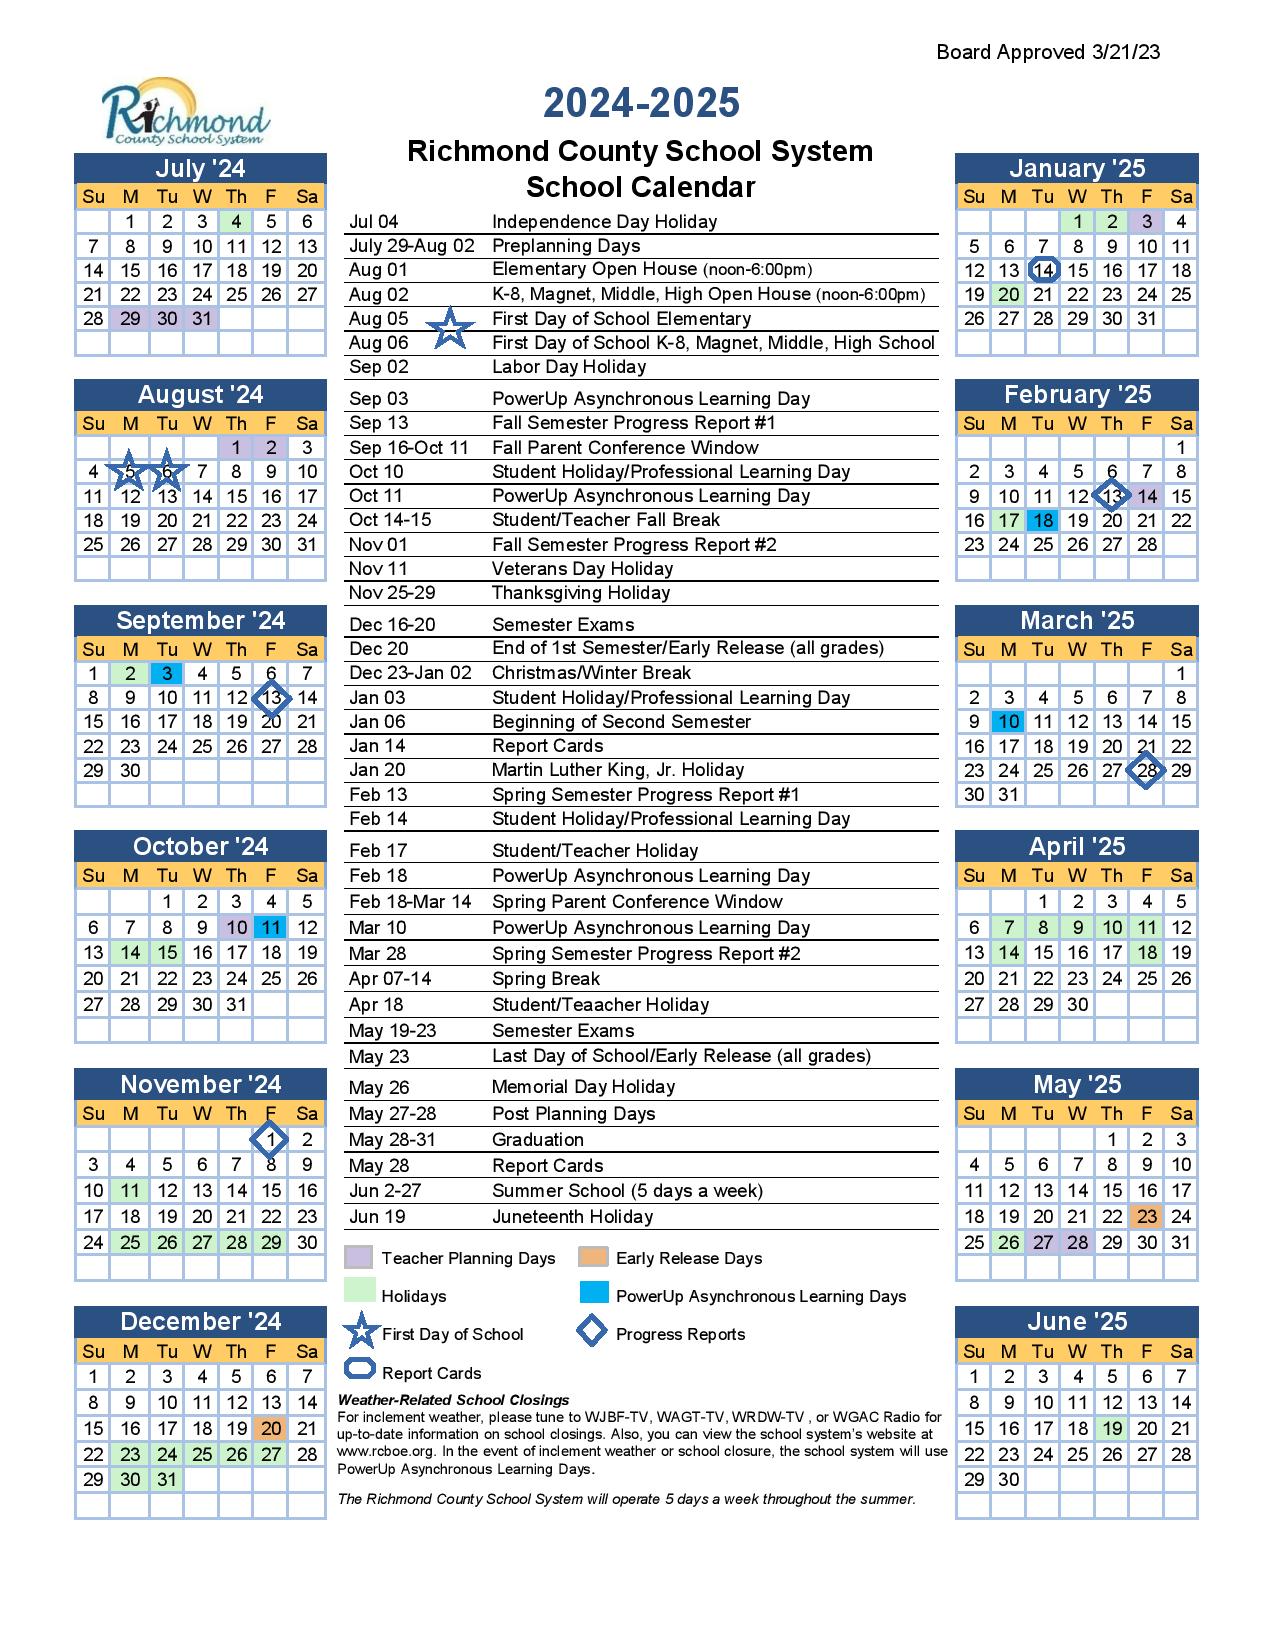 Richmond County Schools Calendar 20242025 (Holiday Breaks)